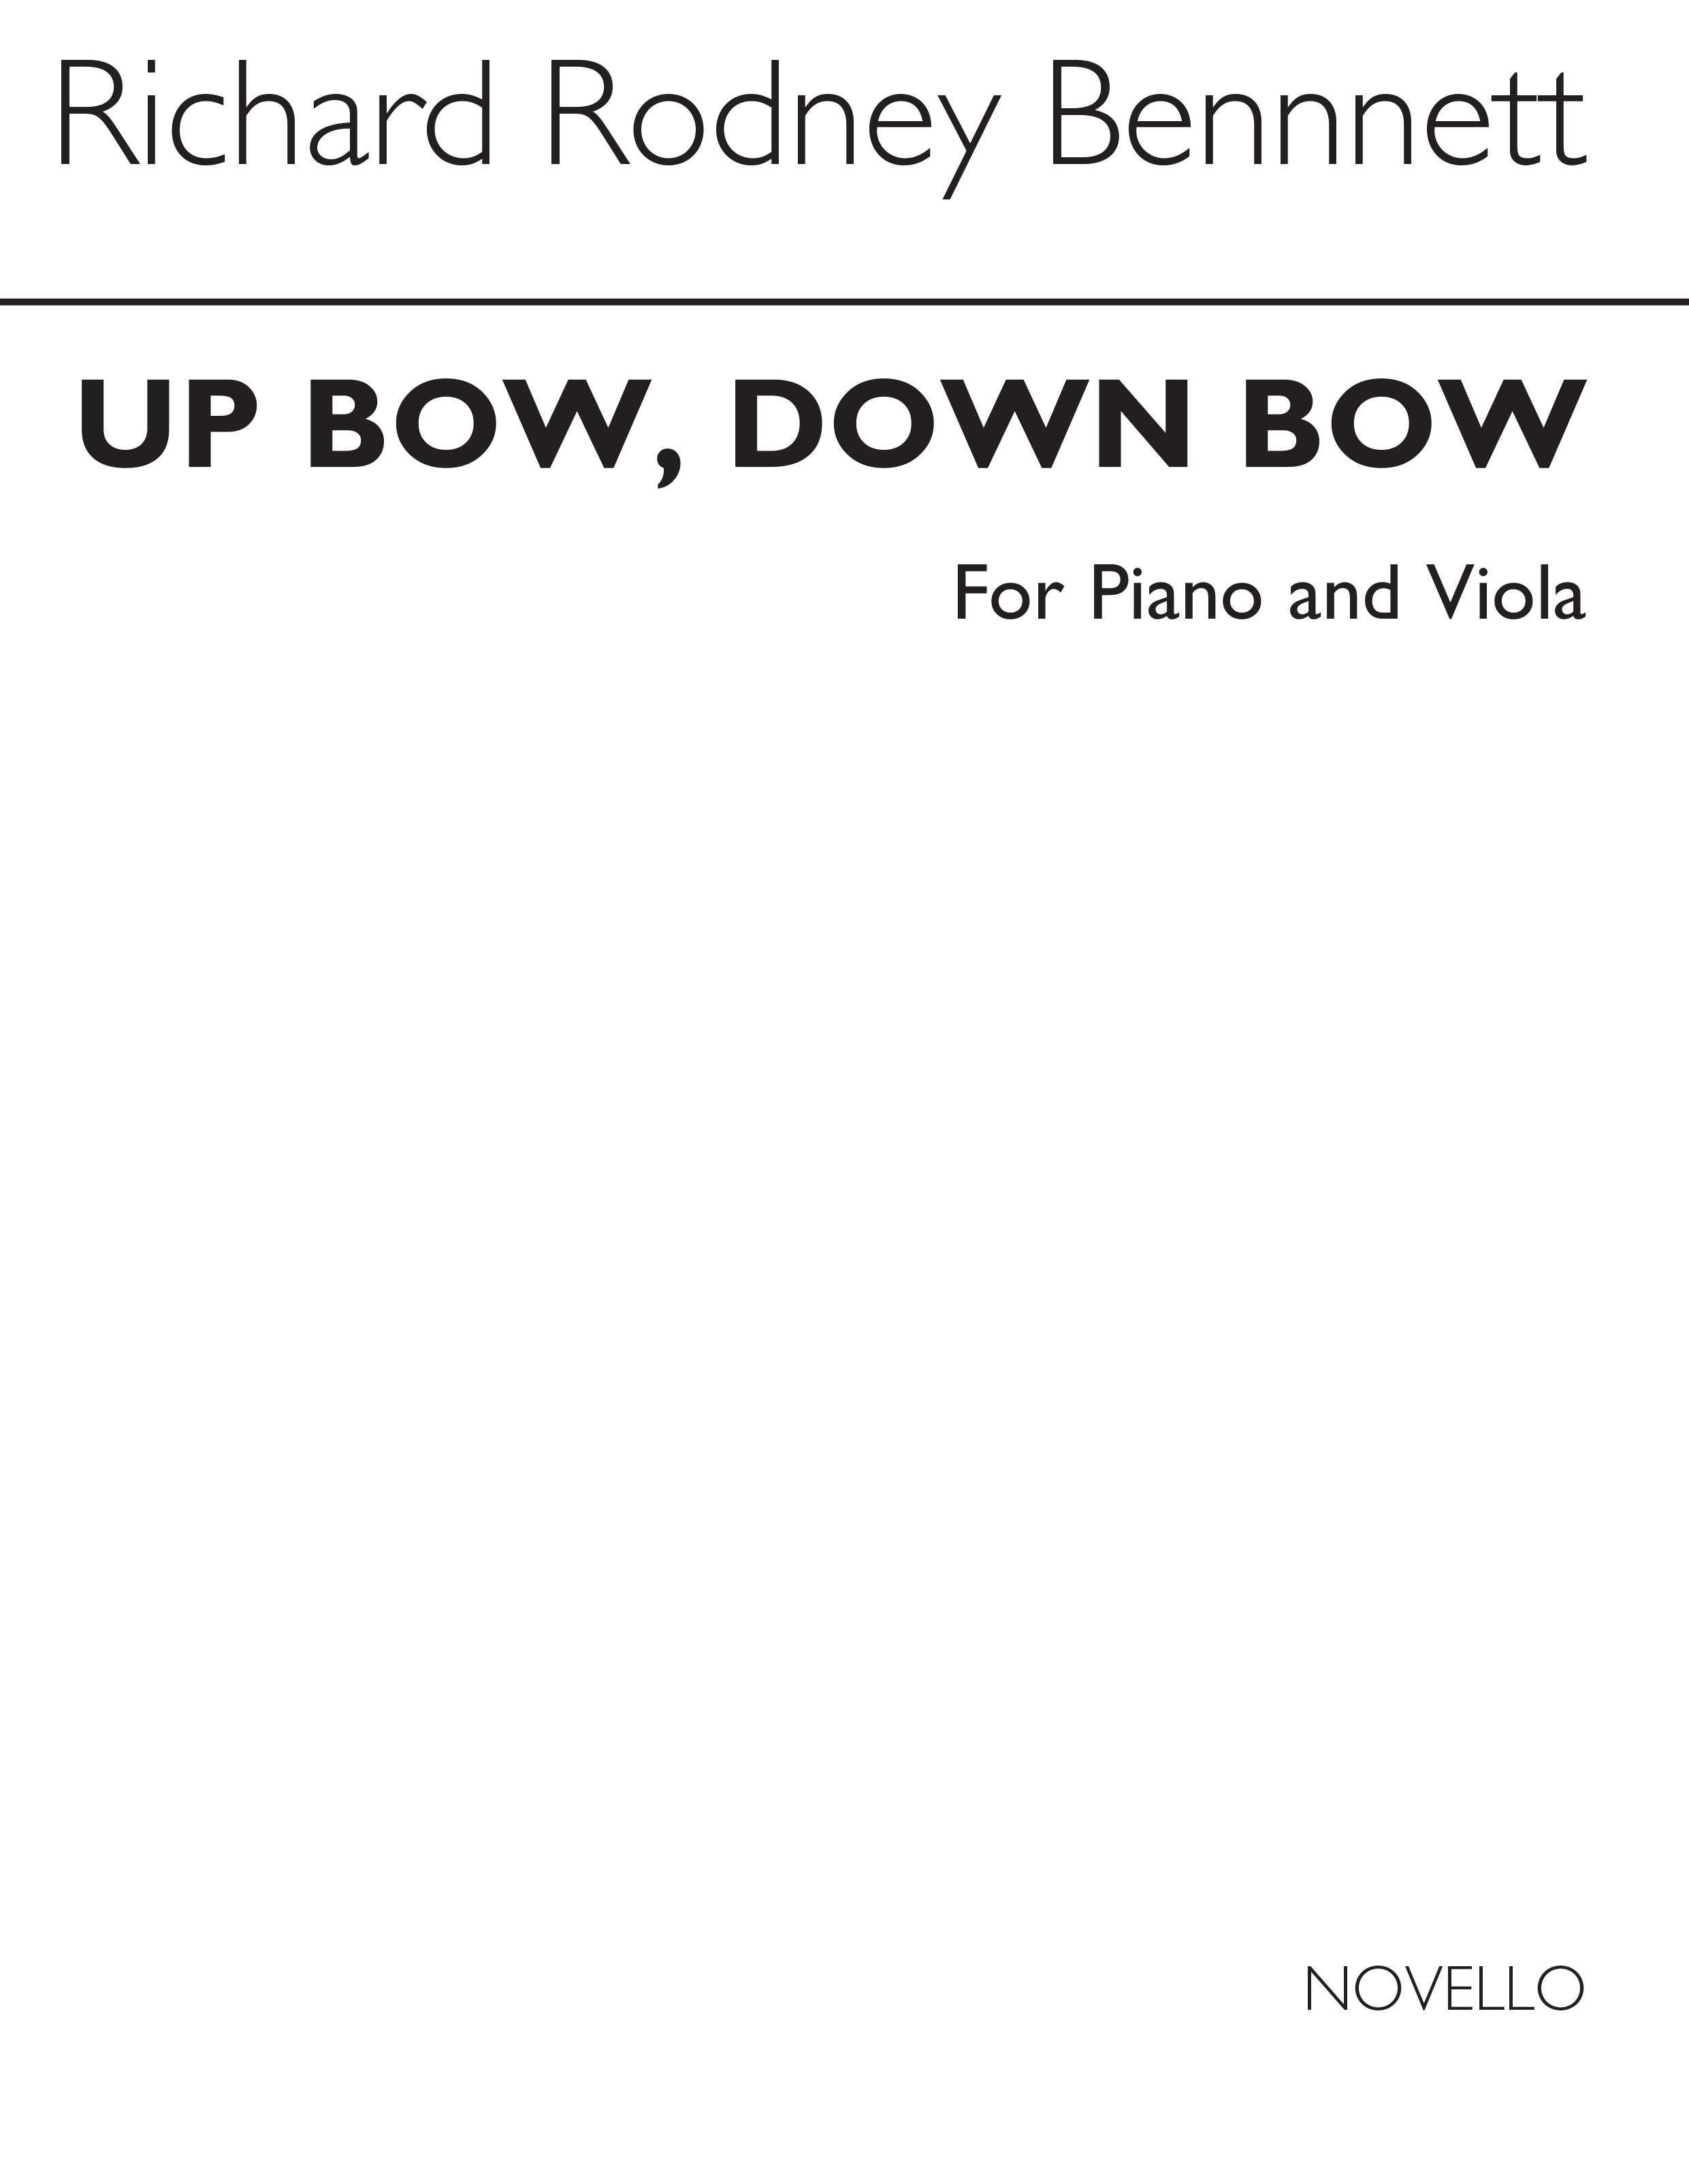 Richard Rodney Bennett: Up Bow, Down Bow For Viola